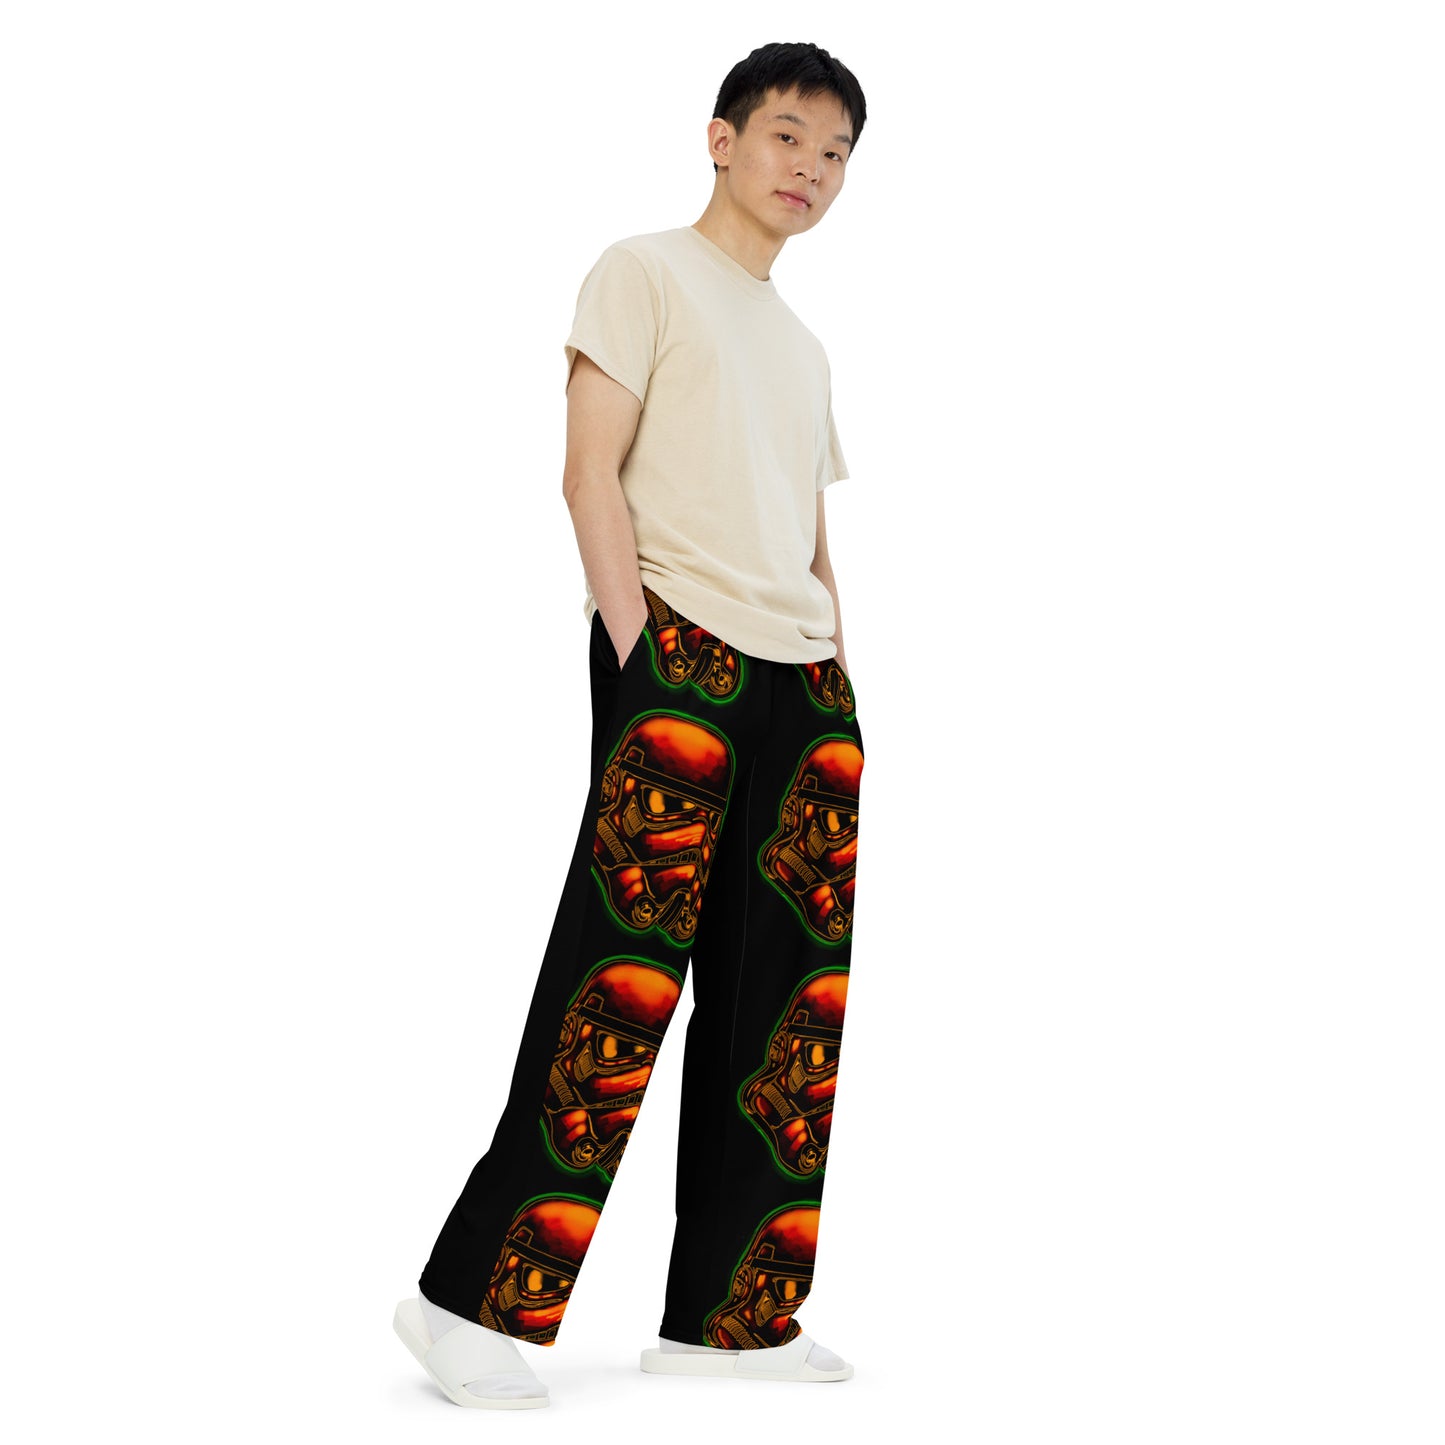 Neon Trooper Rasta All-over print unisex wide-leg pants